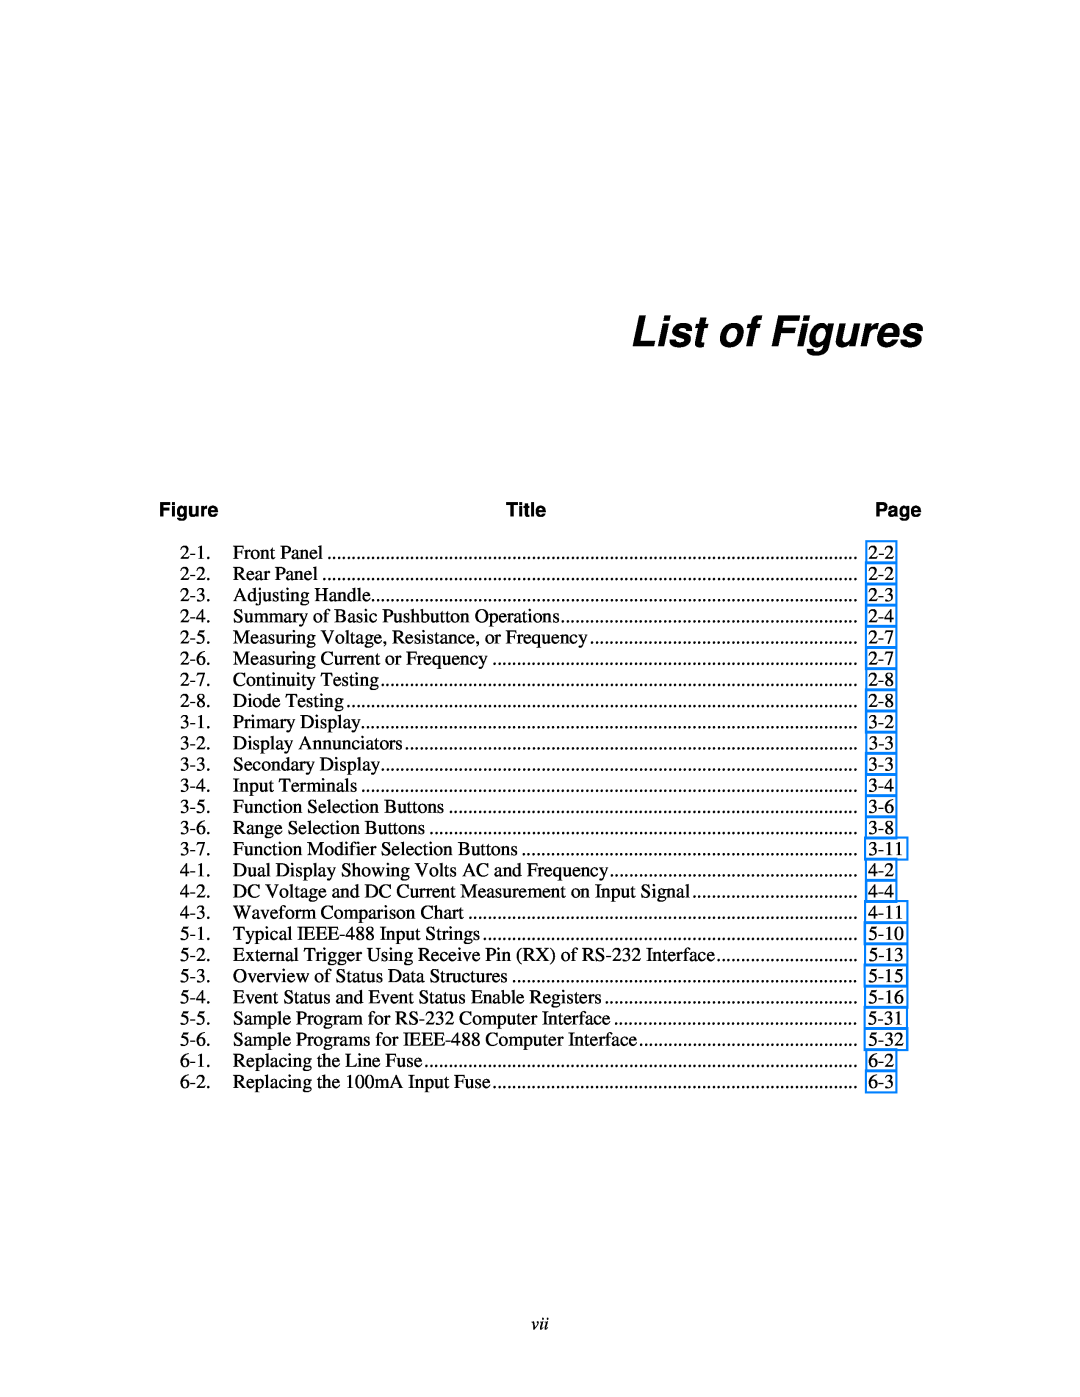 Fluke 45 user manual List of Figures, Title 